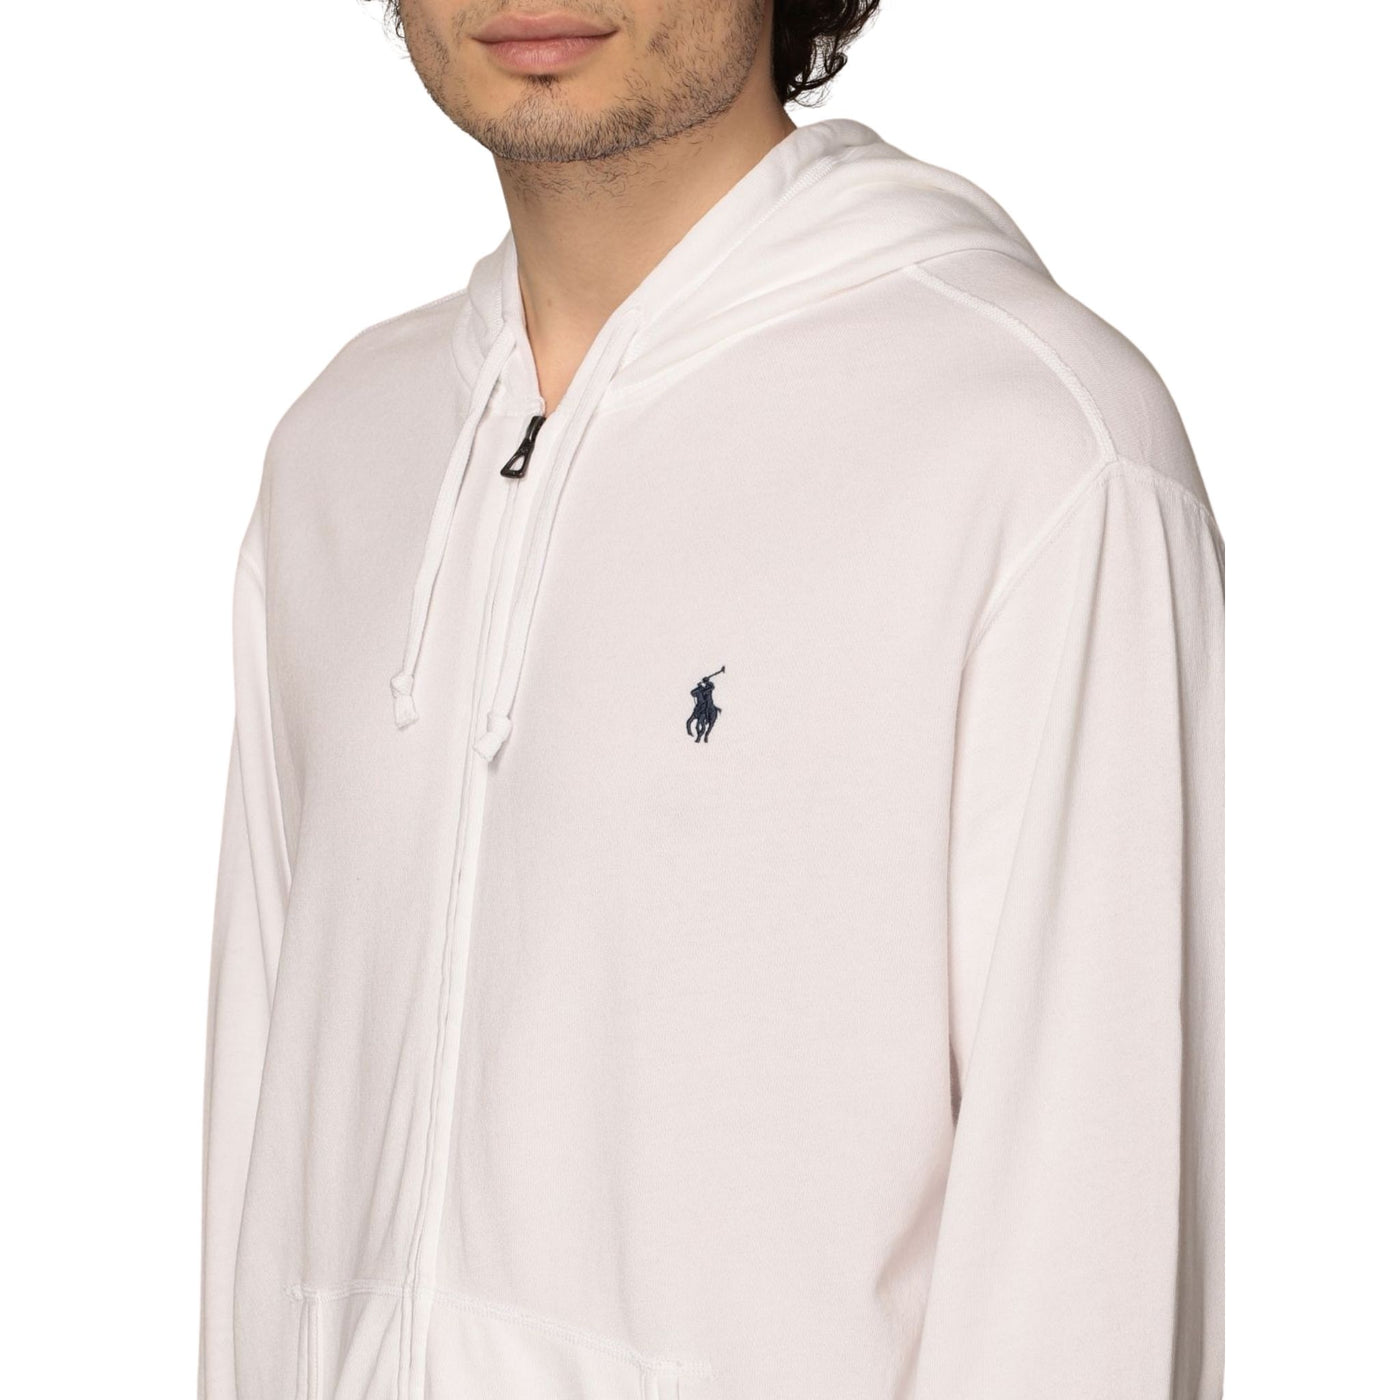 Felpa uomo bianca Polo Ralph Lauren su modello dettaglio logo